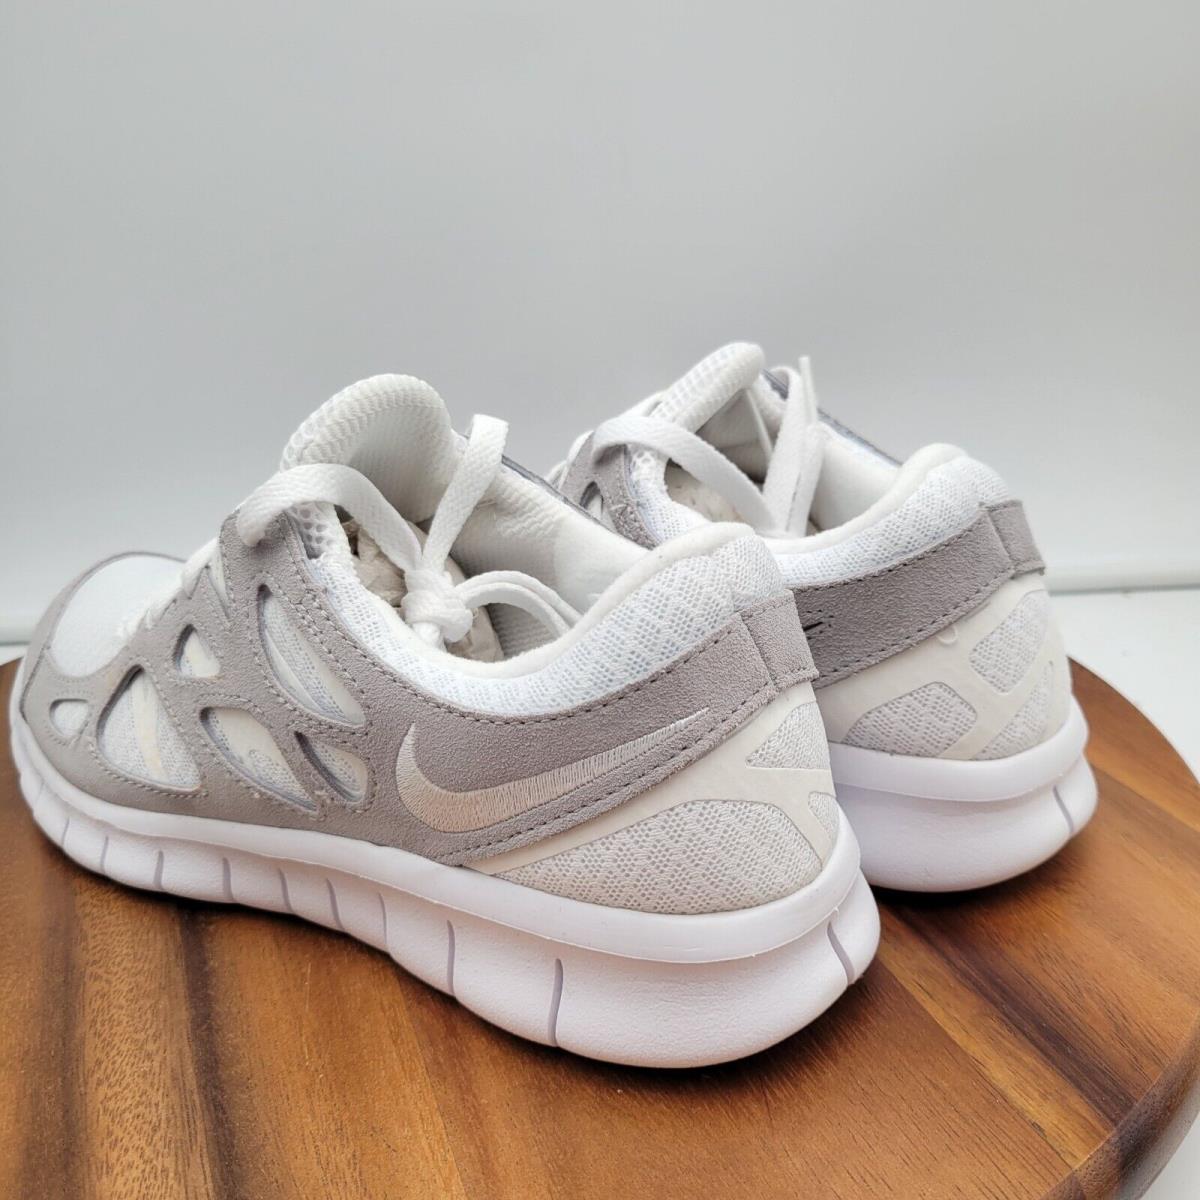 Nike shoes Free Run - White 6